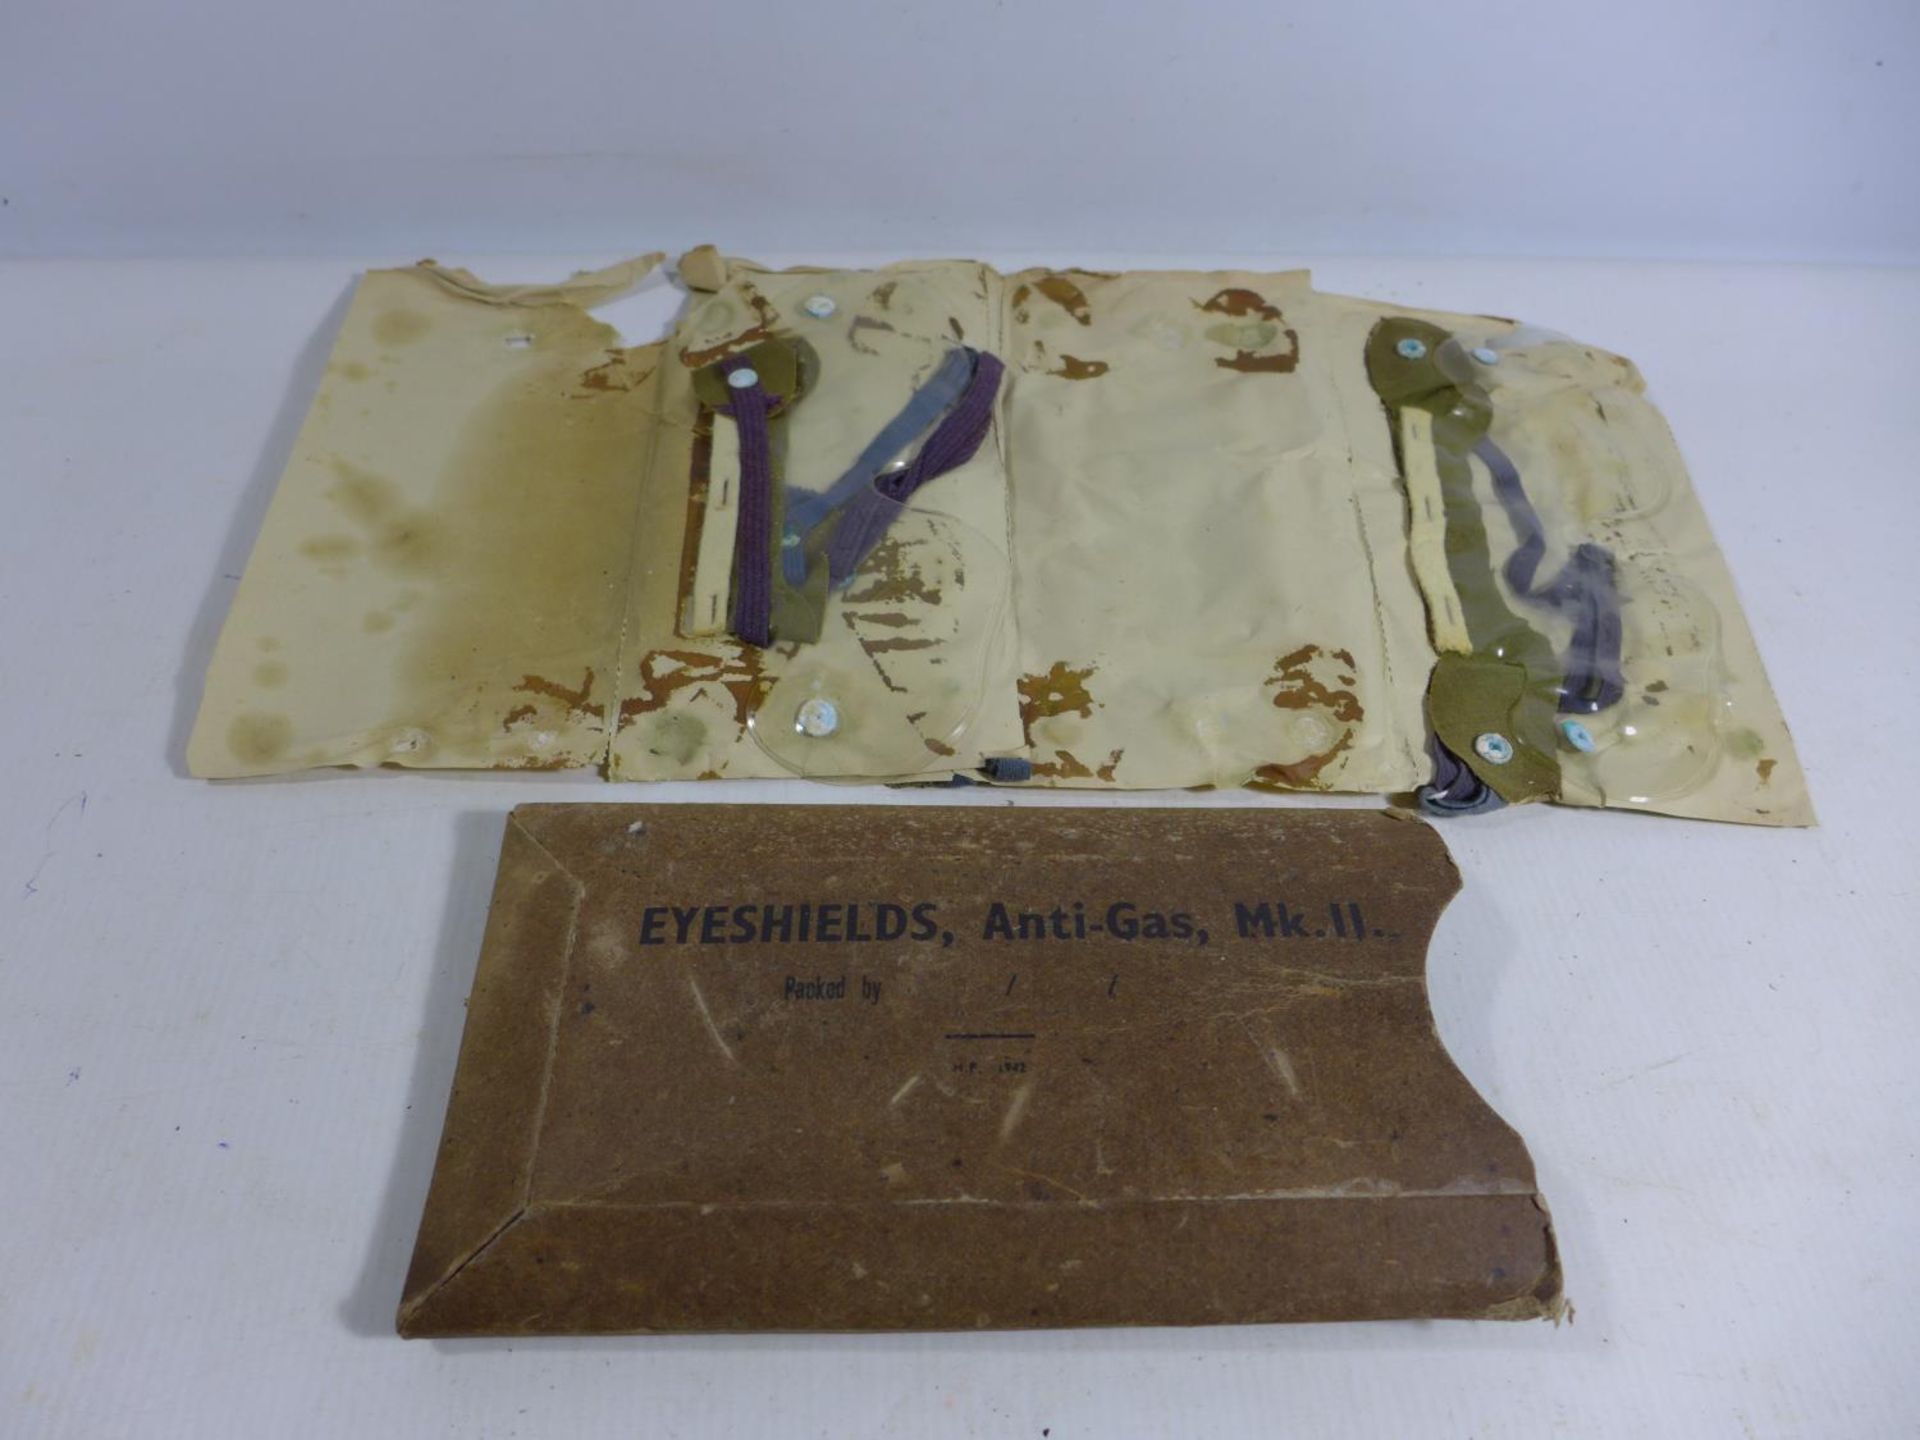 WORLD WAR II EYESHIELDS, ANTI-GAS MK II, THE PACKET CONTAINING FOUR SETS OF EYESHIELDS